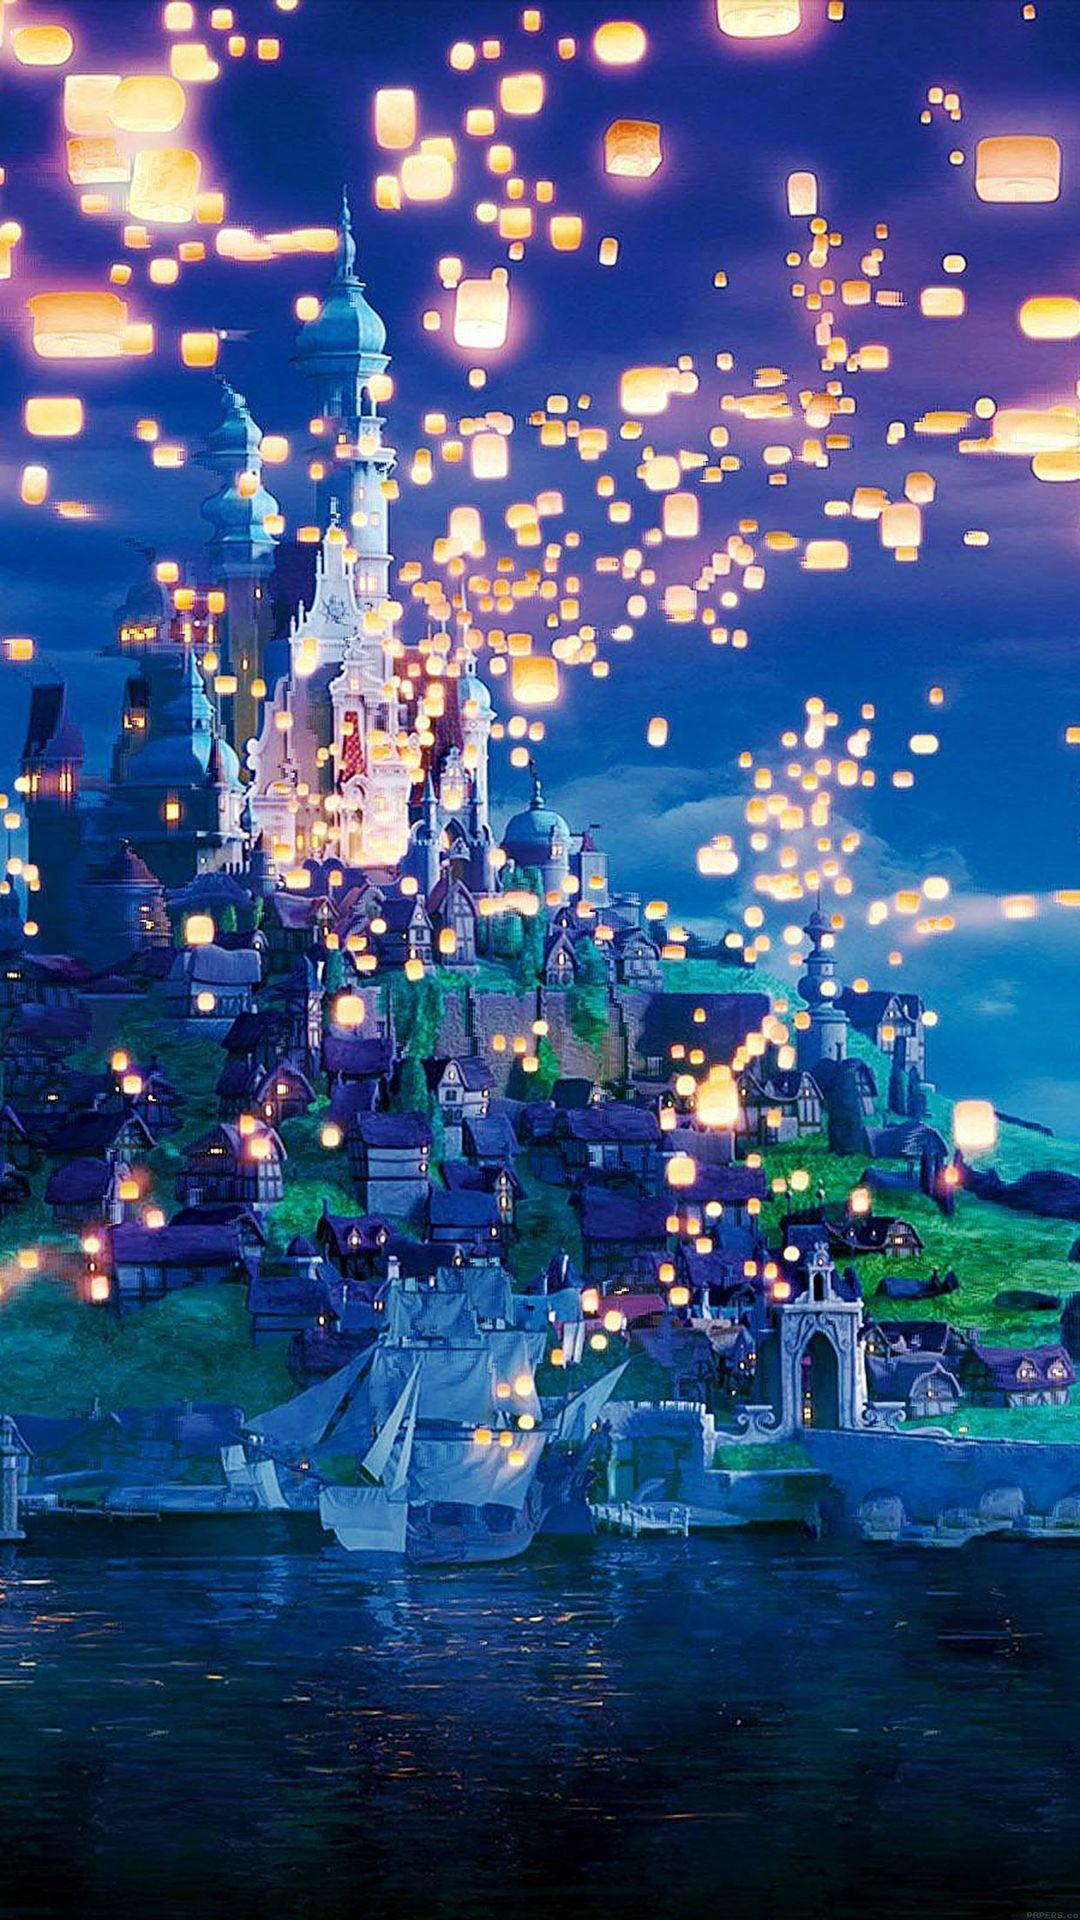 Tap image for more iPhone Disney wallpaper! Rapunzel dreams